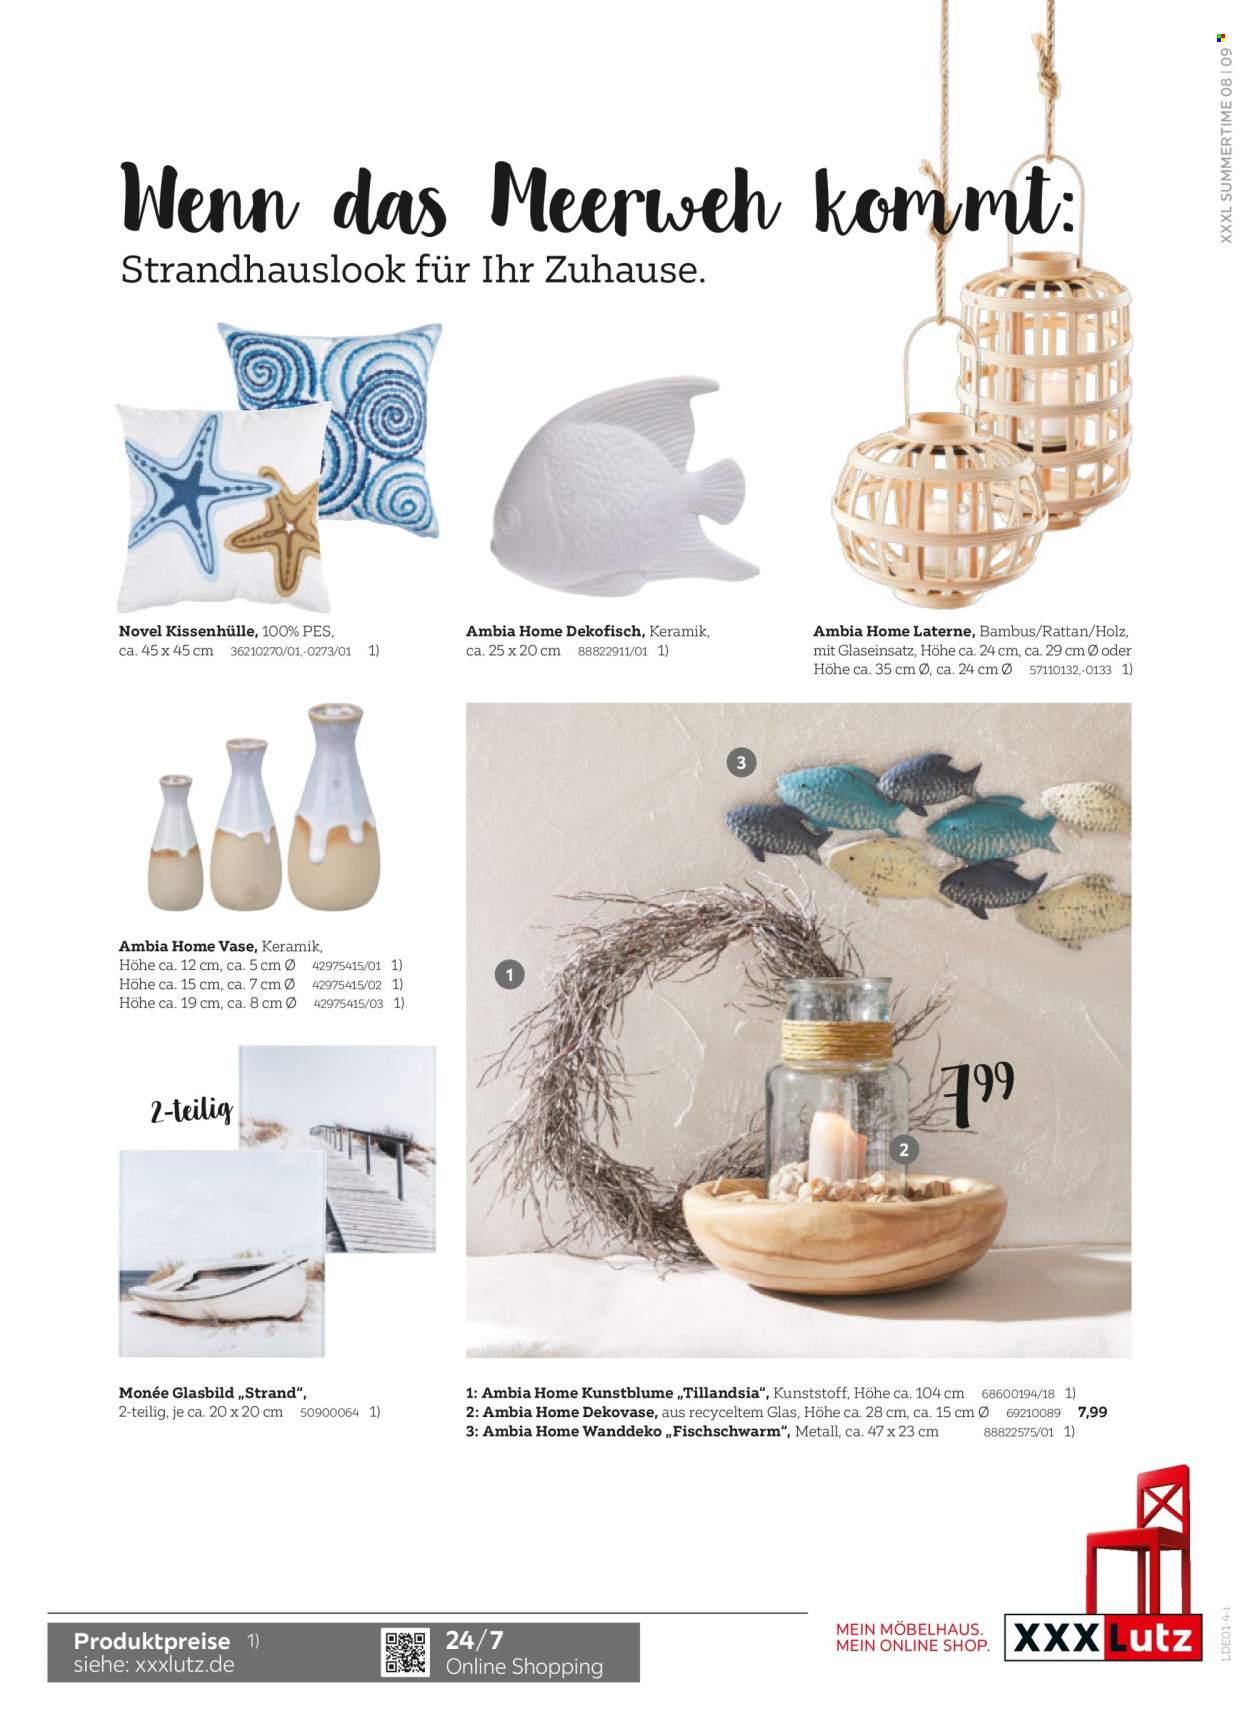 thumbnail - Prospekte XXXLutz - Produkte in Aktion - Kissenbezug, Vase, Wanddeko, Kunstblume, Glasbild, Laterne, Tillandsia. Seite 9.